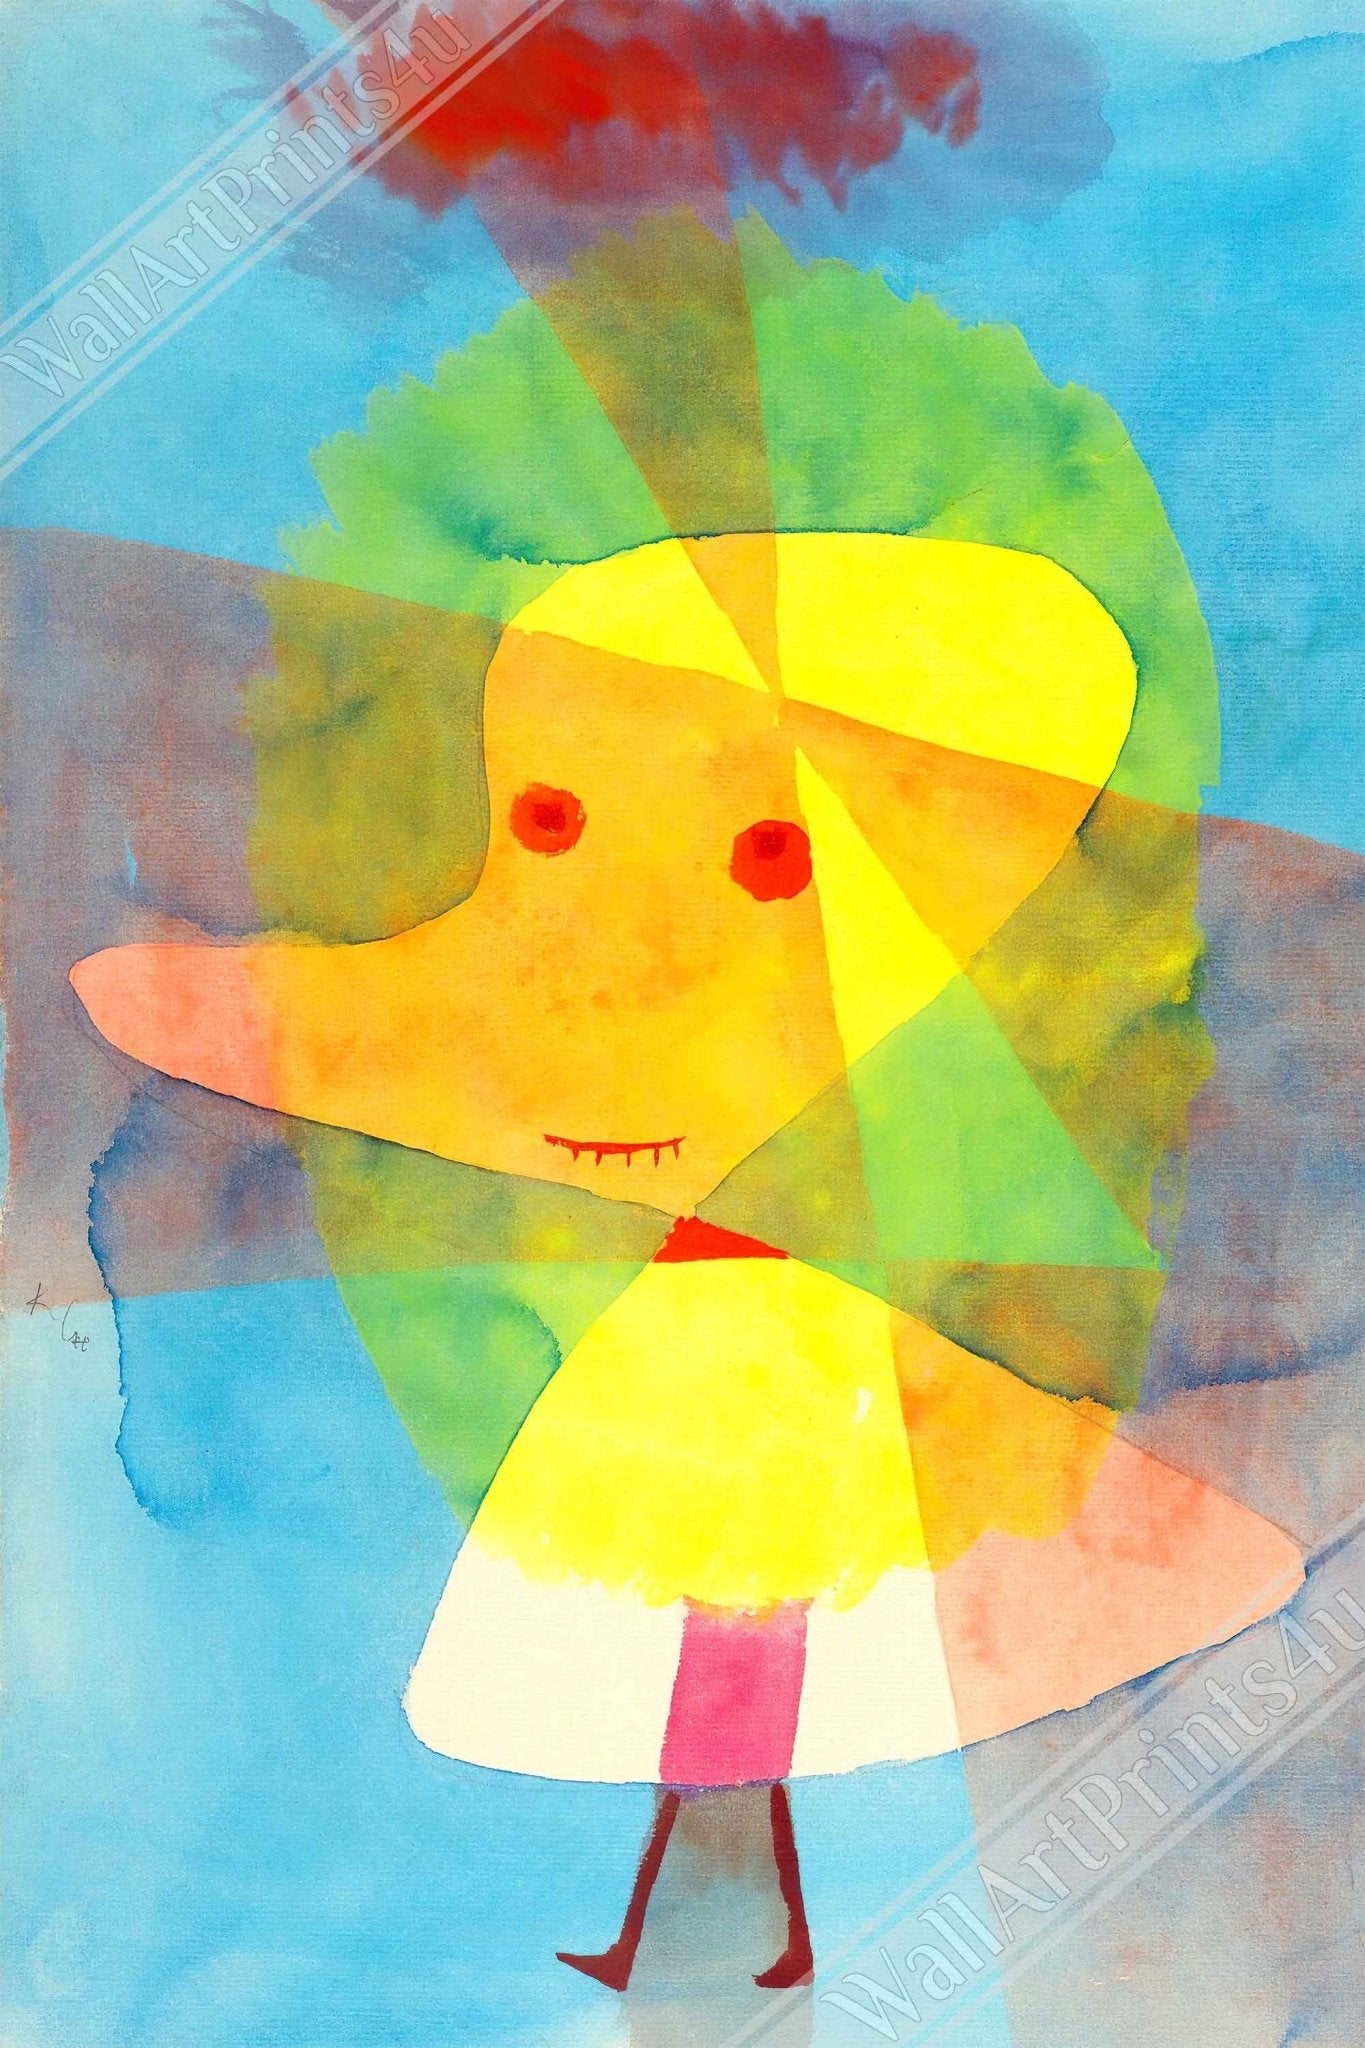 Rubber Duck Framed Print, Paul Klee Small Garden Ghost Framed, Paul Klee Frameds Abstract Art - WallArtPrints4U